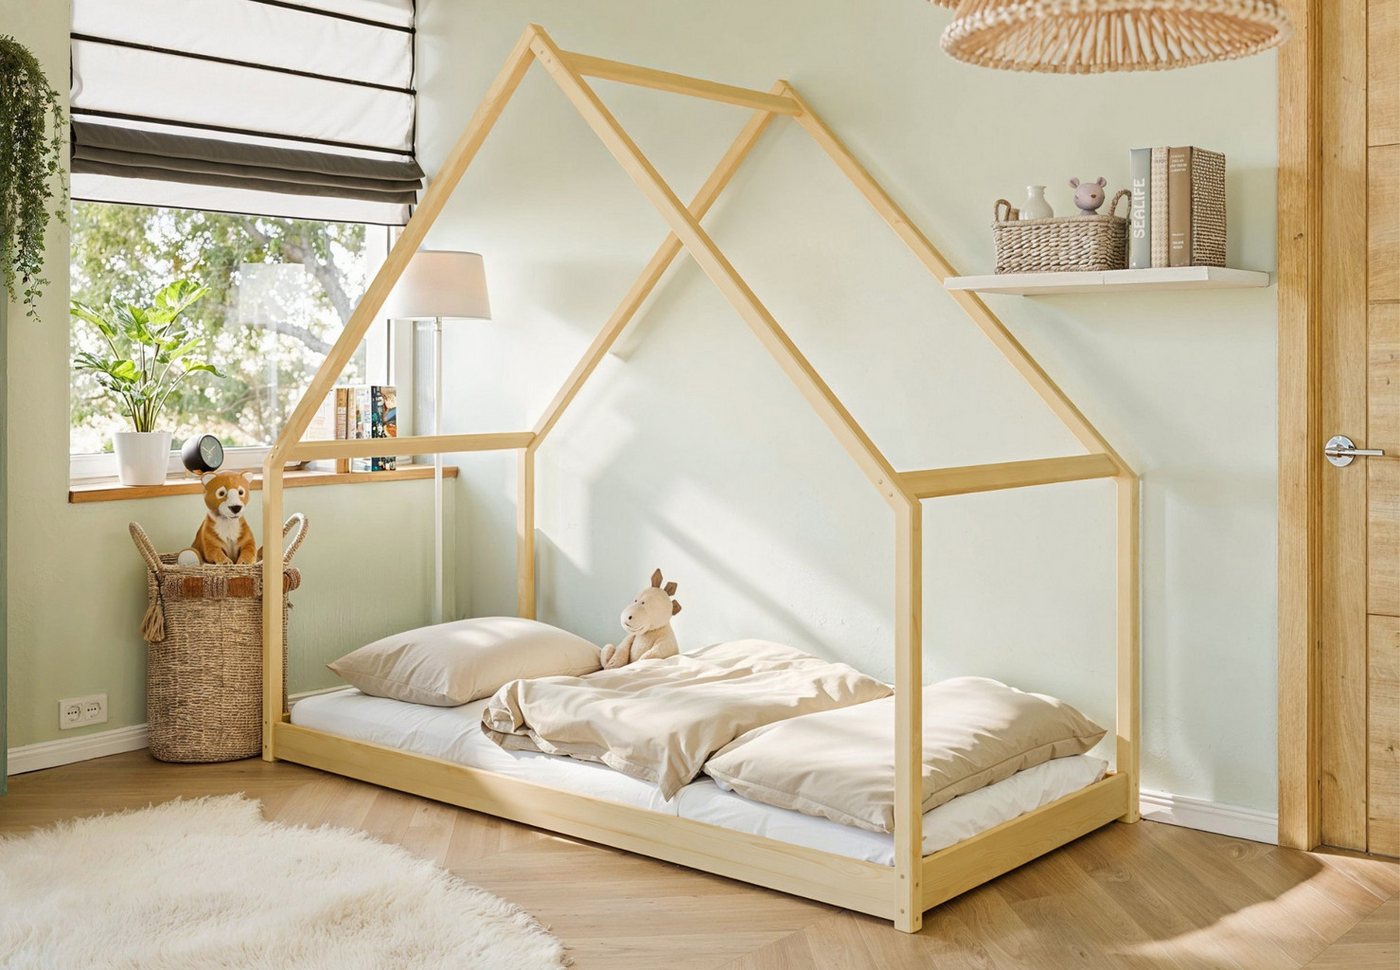 Kids Collective Hausbett Kinderbett 90x200 cm Bett mit Lattenrost Bodenbett günstig online kaufen